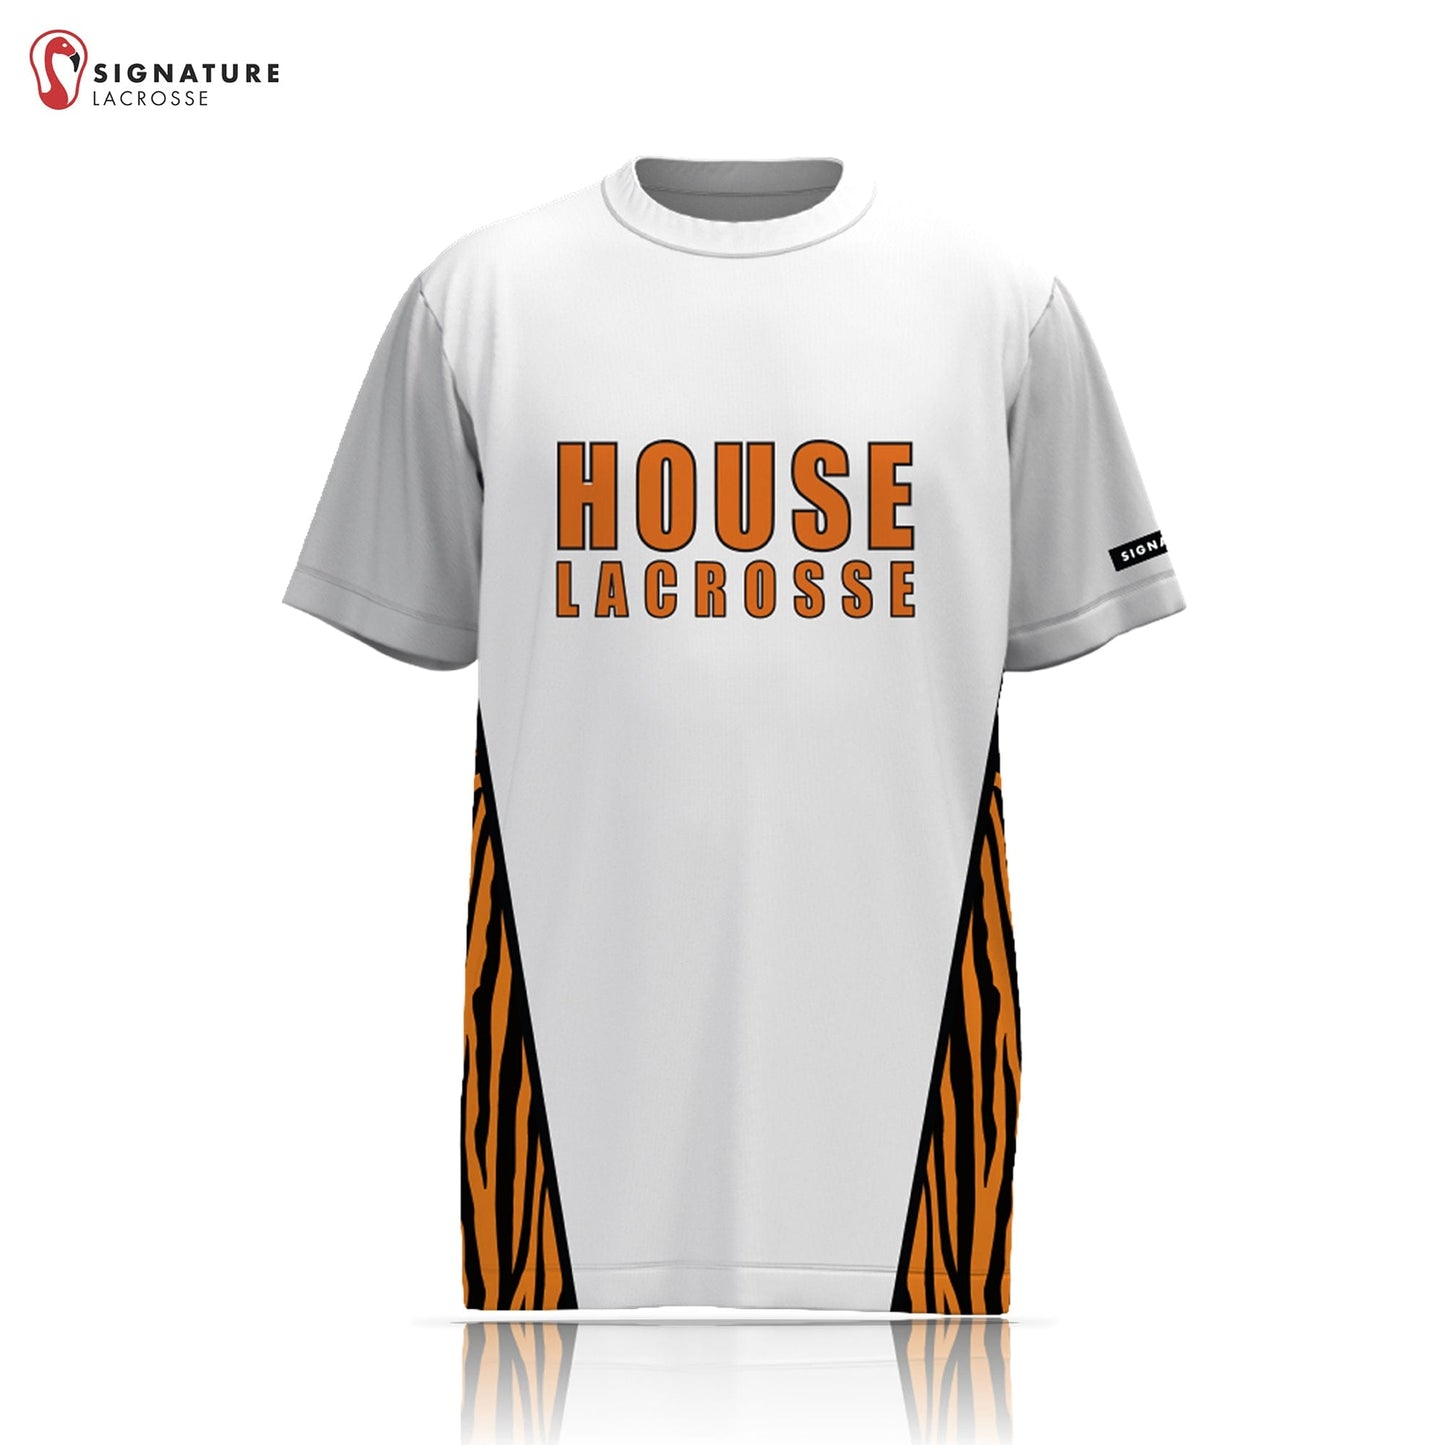 House of Sports Girls Lacrosse Pro Short Sleeve Shooting Shirt:2029 Signature Lacrosse